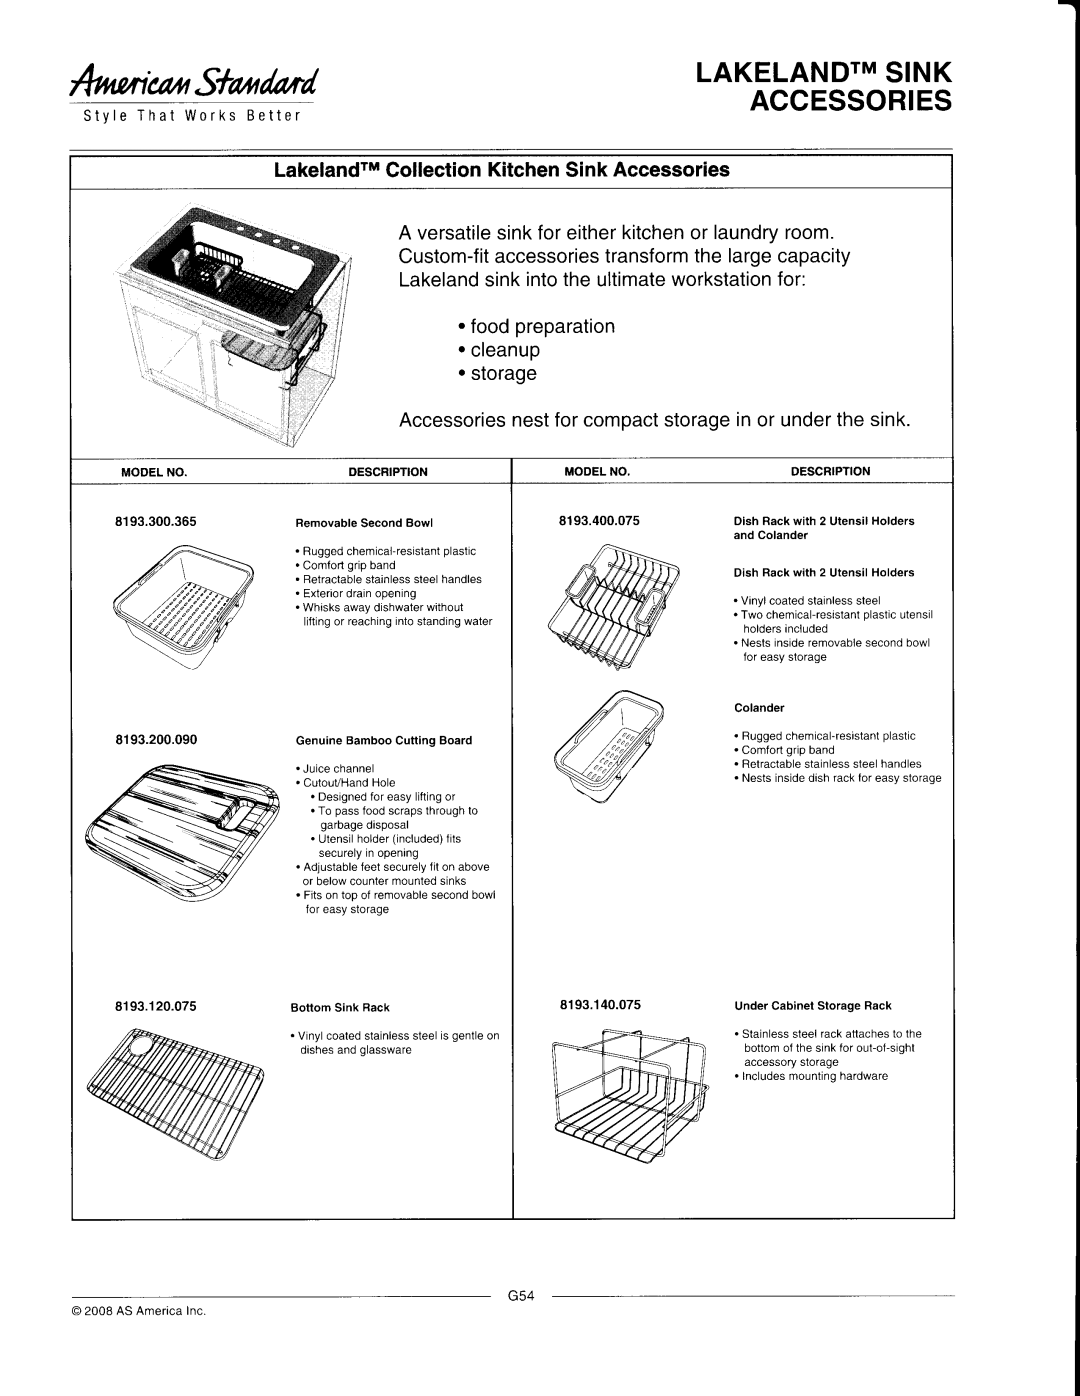 American Standard 8193.300.365 manual Ar%W, r4tnoncouSfanda,rdLAKELANDTMSINK, Accessories, foodpreparation cleanup storage 